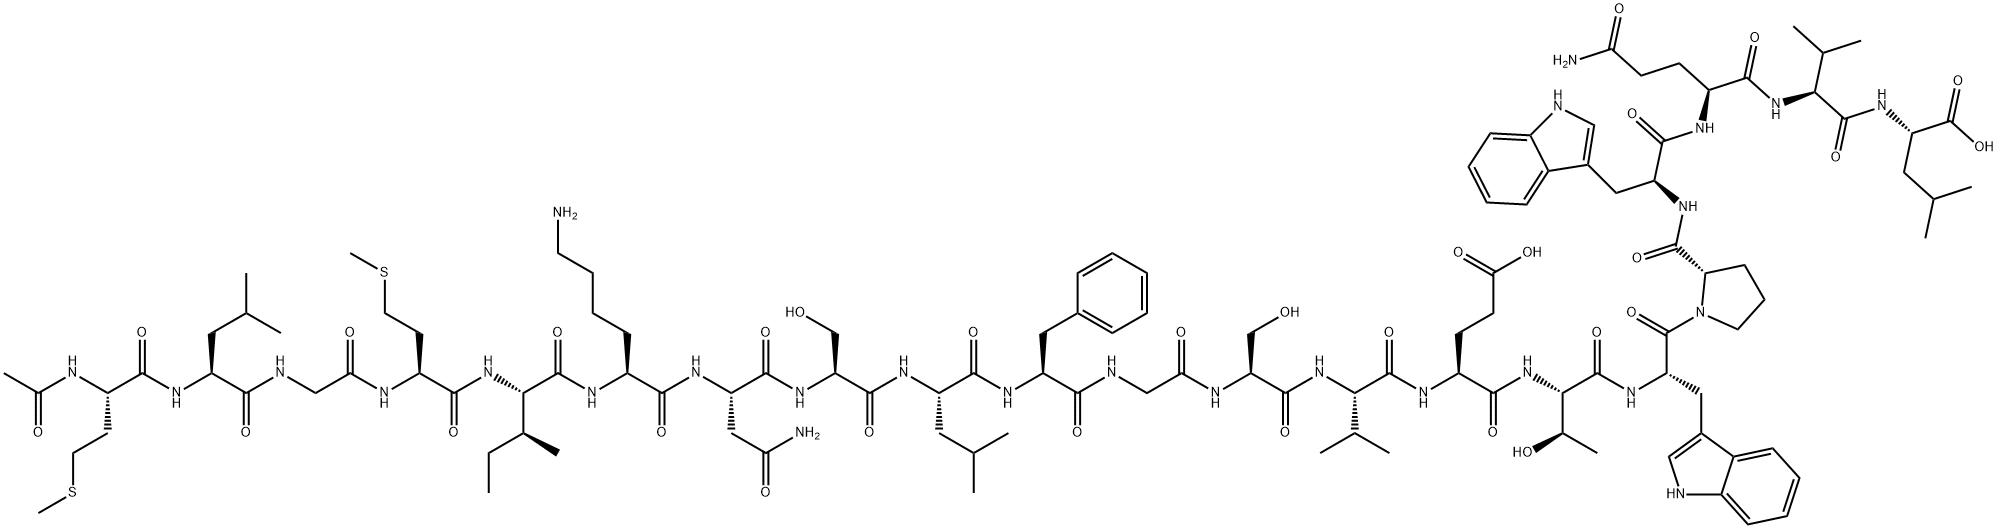 Acetyl-Heme-Binding Protein 1 (1-21) (human) Structure